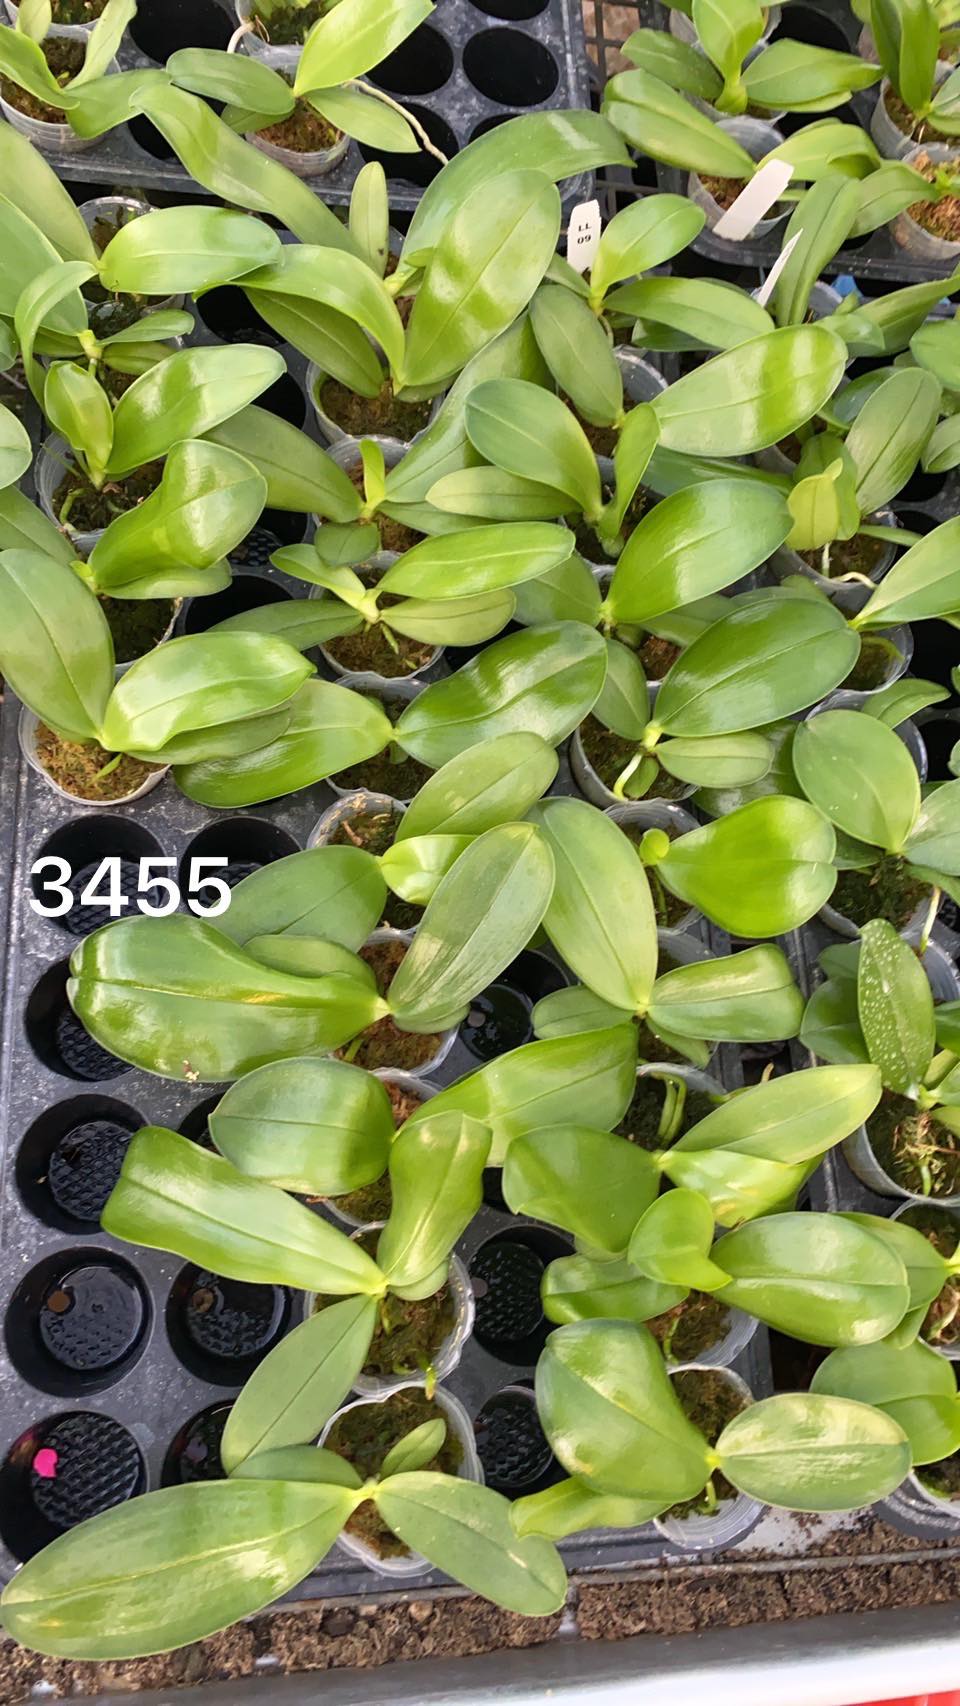 Phalaenopsis (violacea X LL Blue In Green)